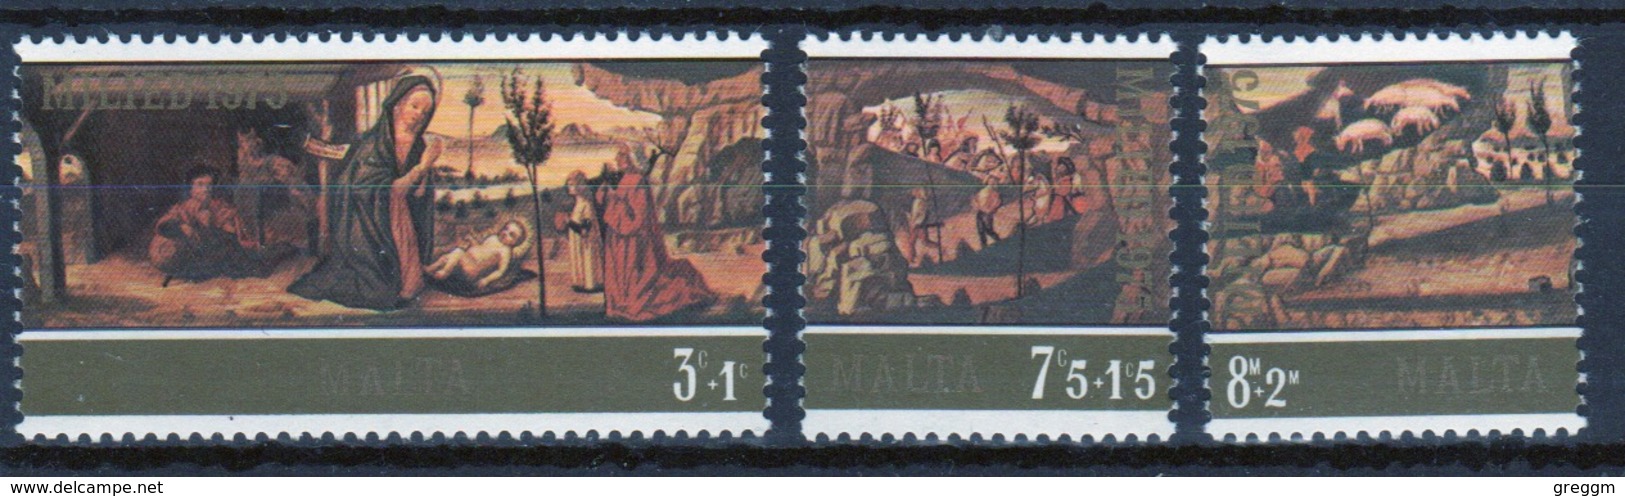 Malta 1975 Complete Set Of Stamps To Celebrate Christmas. - Malta